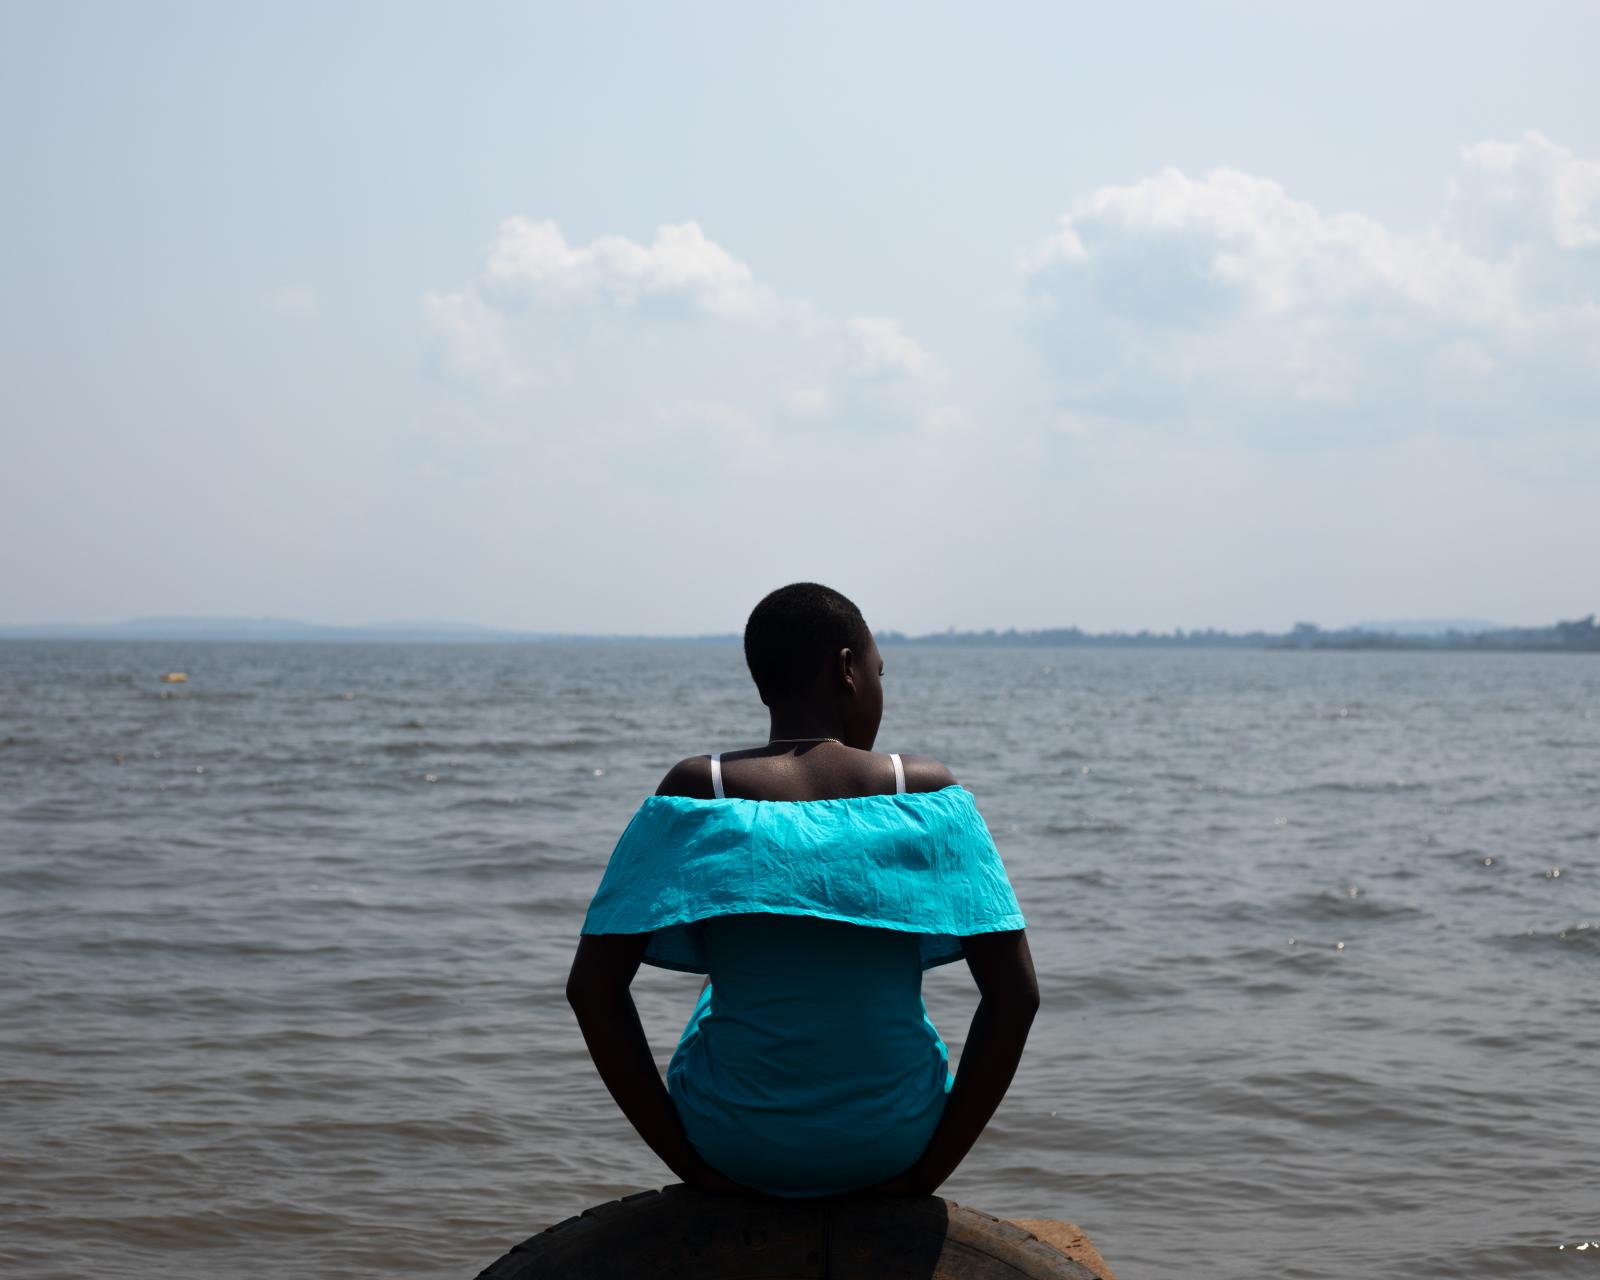 Surviving Bery: A Girlhood Trauma | DeLovie Kwagala  - “The lake reminds me of love. It mothered me...